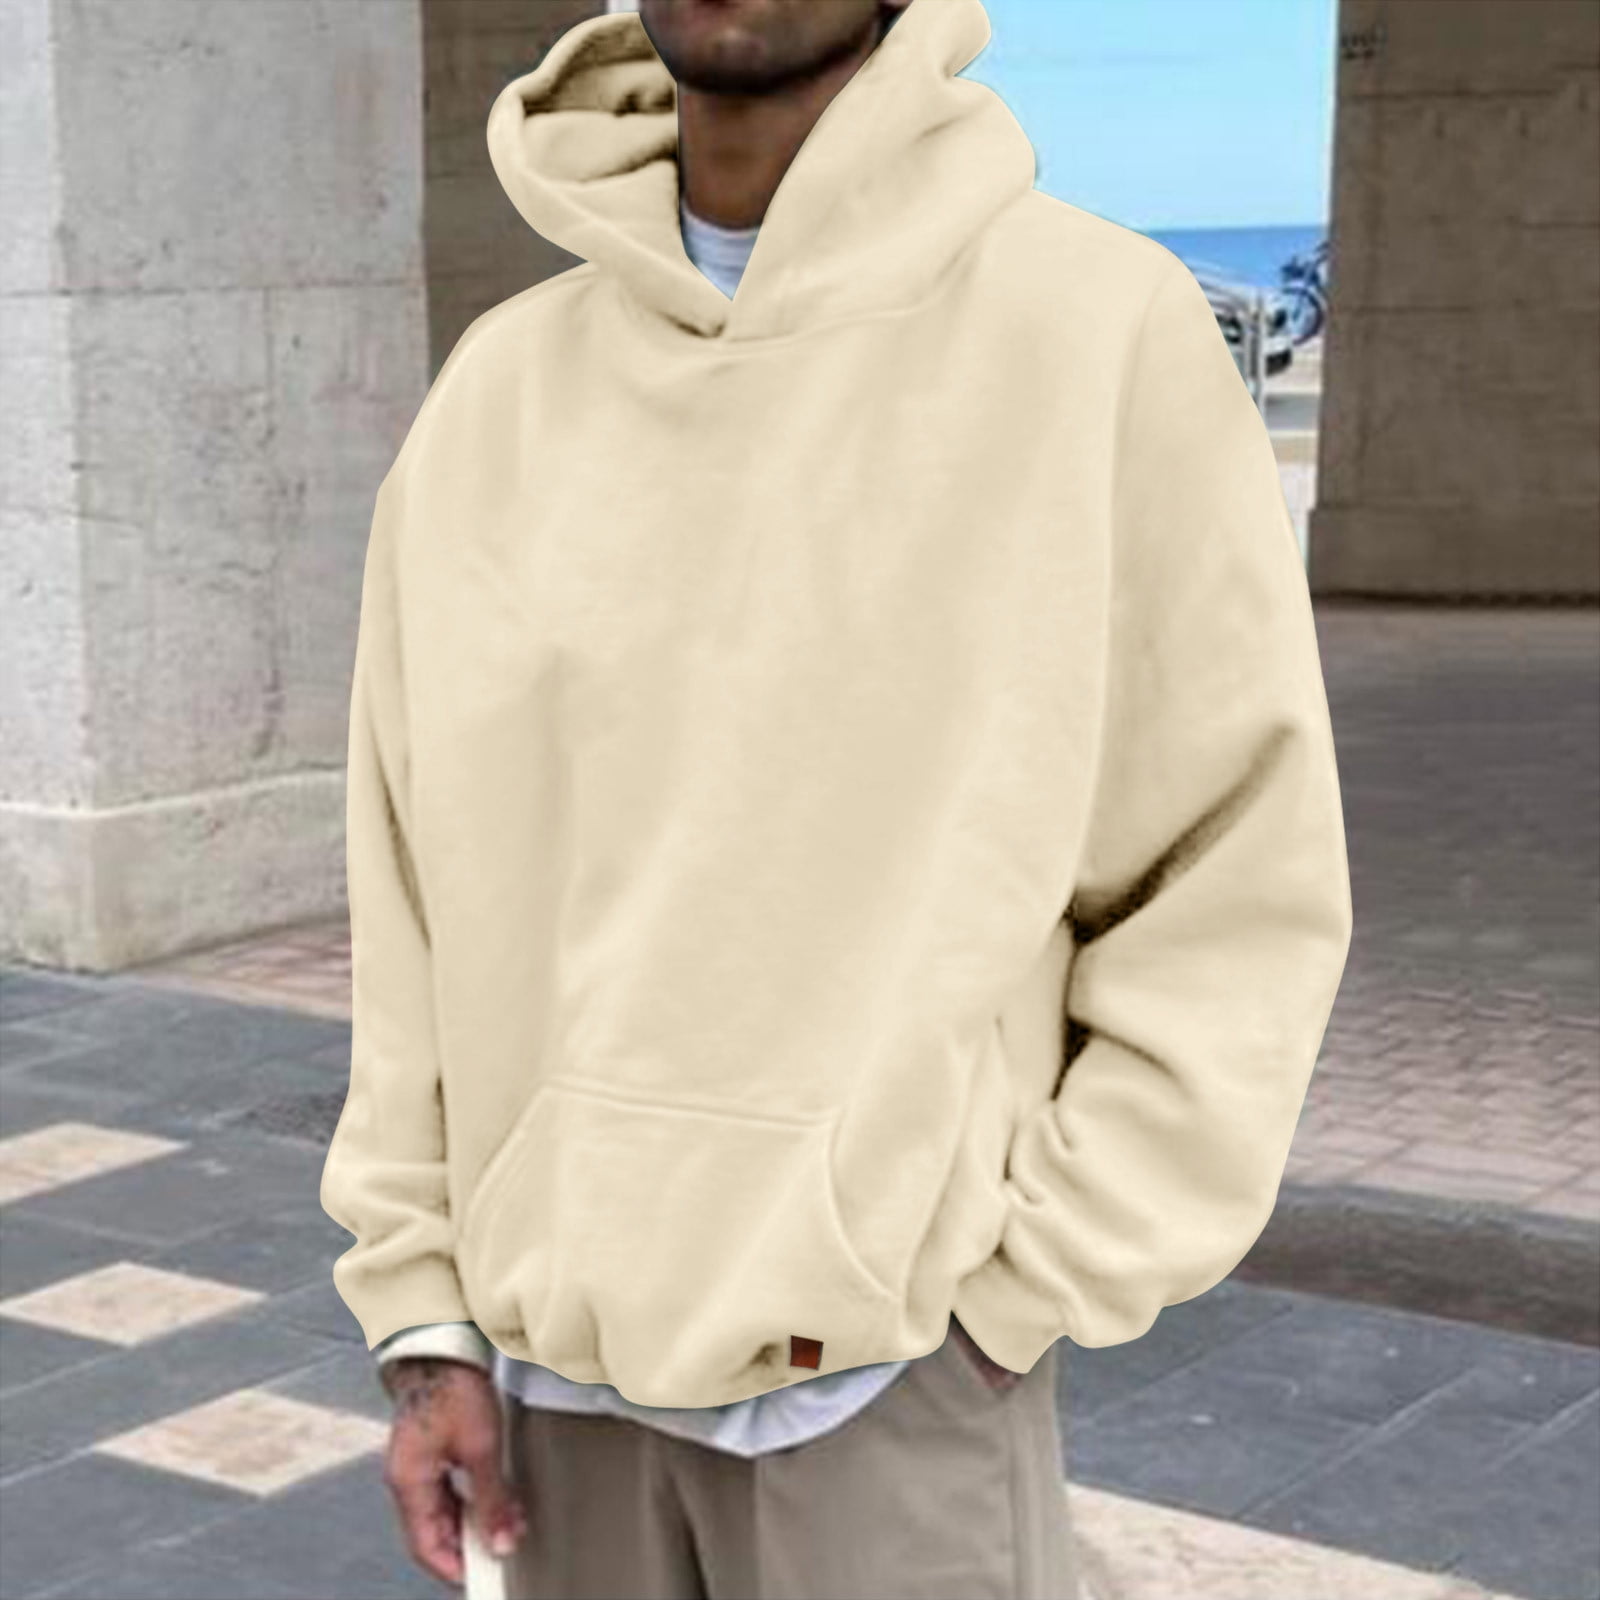 LEEy-world Graphic Hoodies For Men Mens Casual Fashion Sweatshirt  Lightweight Active Pollover Shirt Hoodie Beige,M